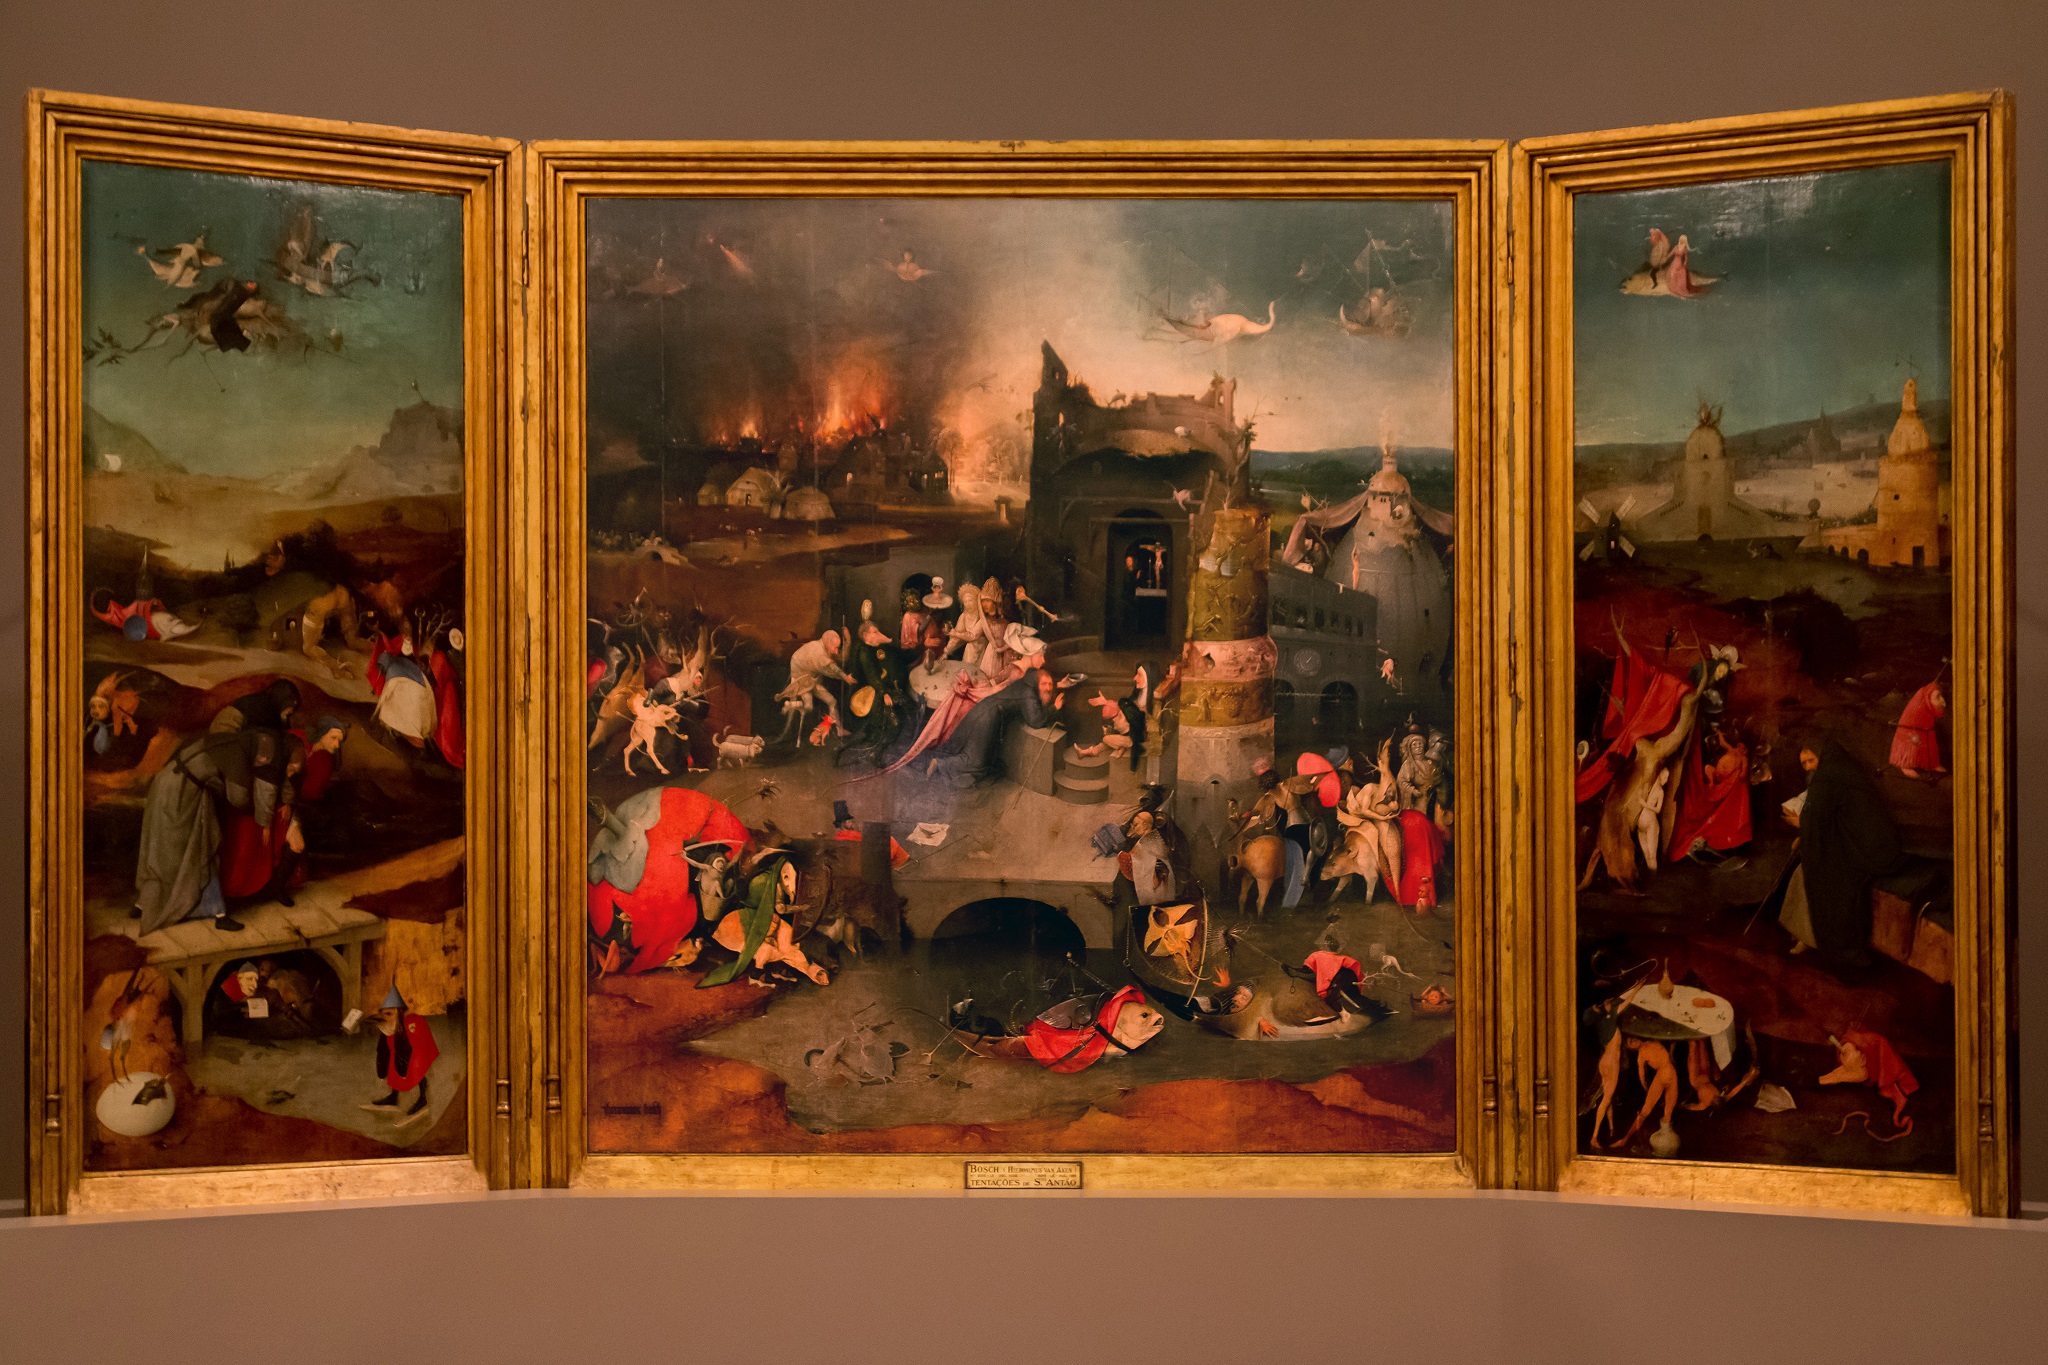 The Temptation of Saint Anthony - Jerome Bosch - National Museum of Ancien Art - Lisbon